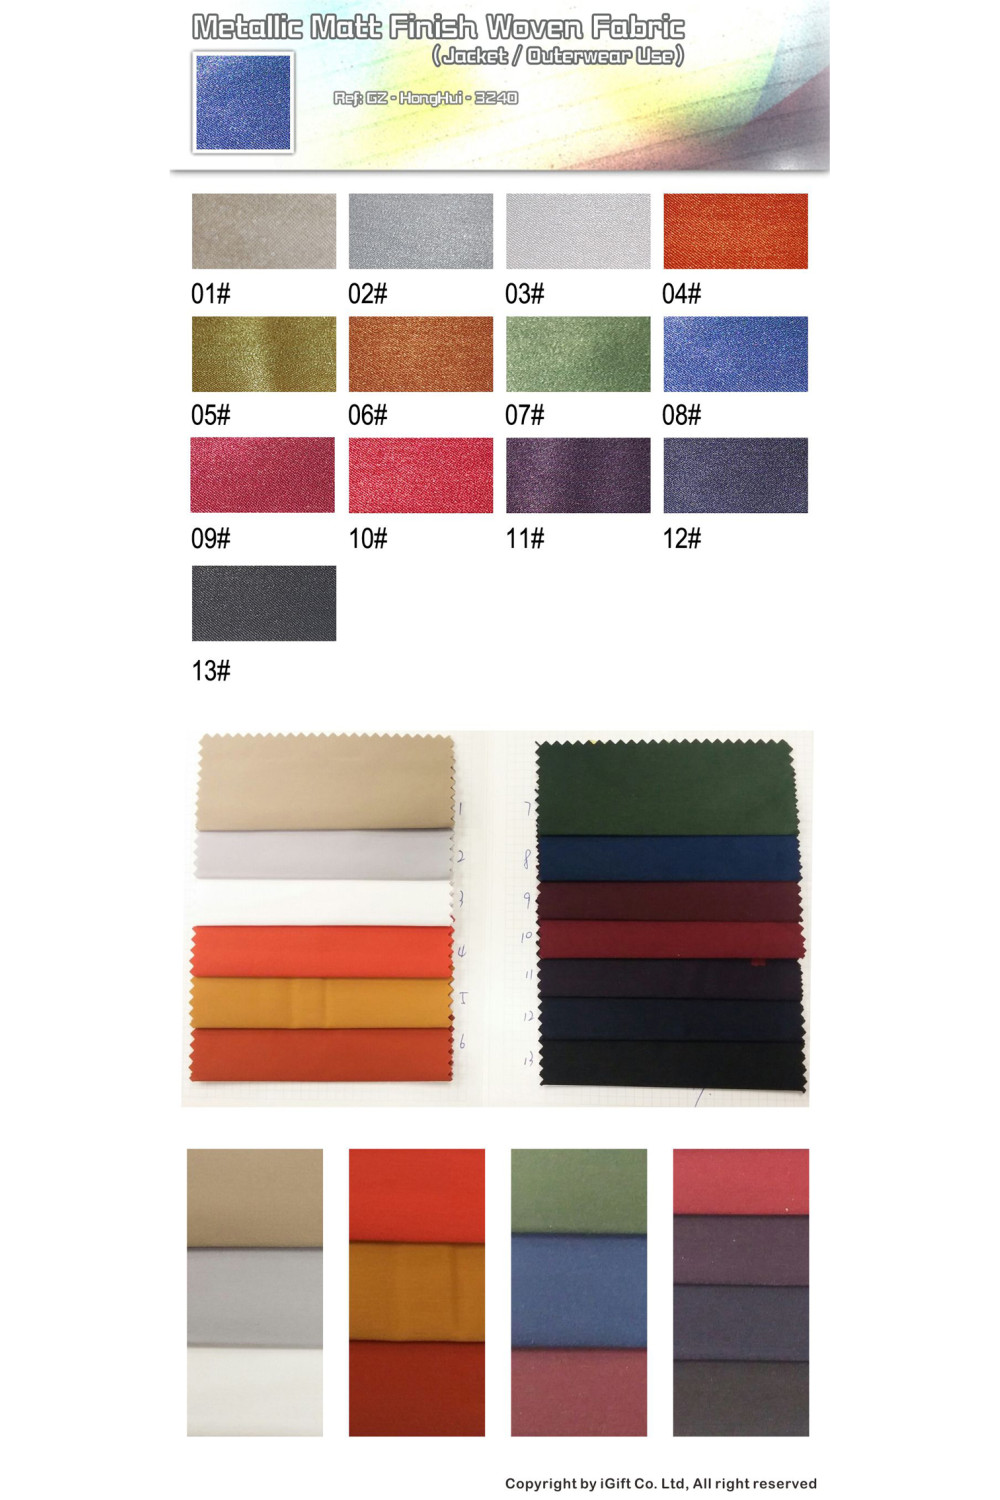 MetallicShiny Finish Woven Fabric 3240